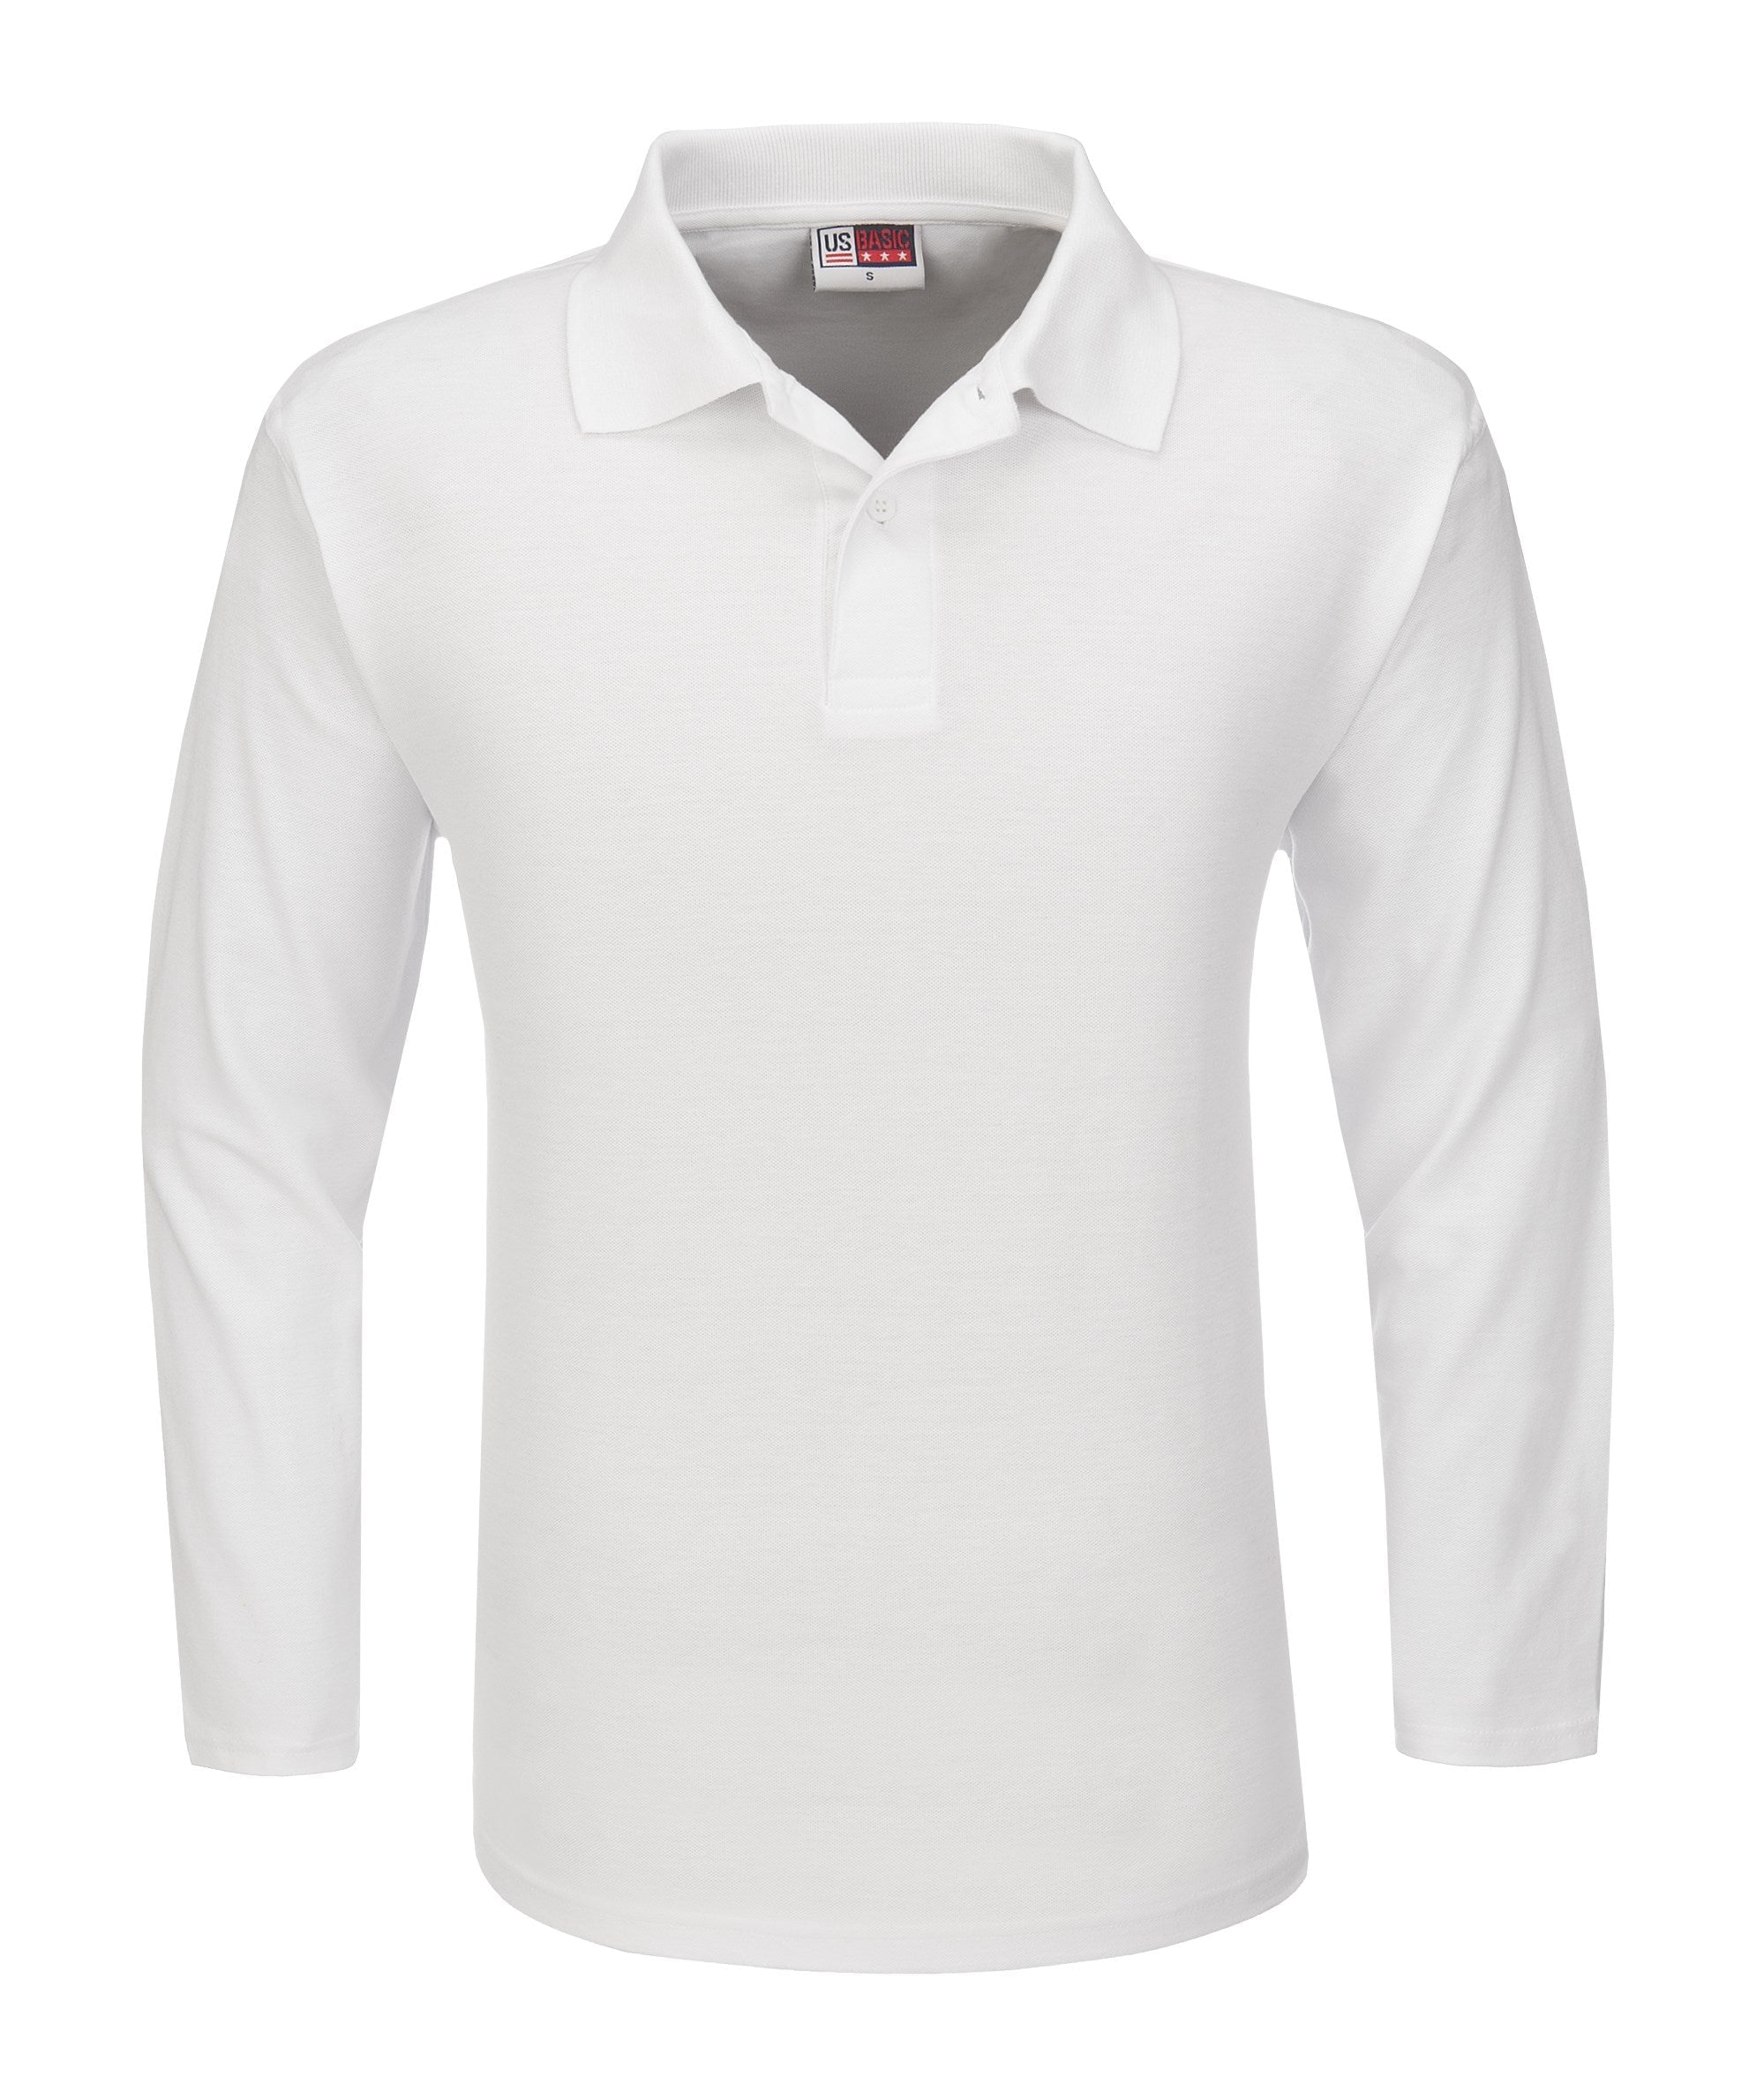 Mens Long Sleeve Boston Golf Shirt - Black Only-2XL-White-W